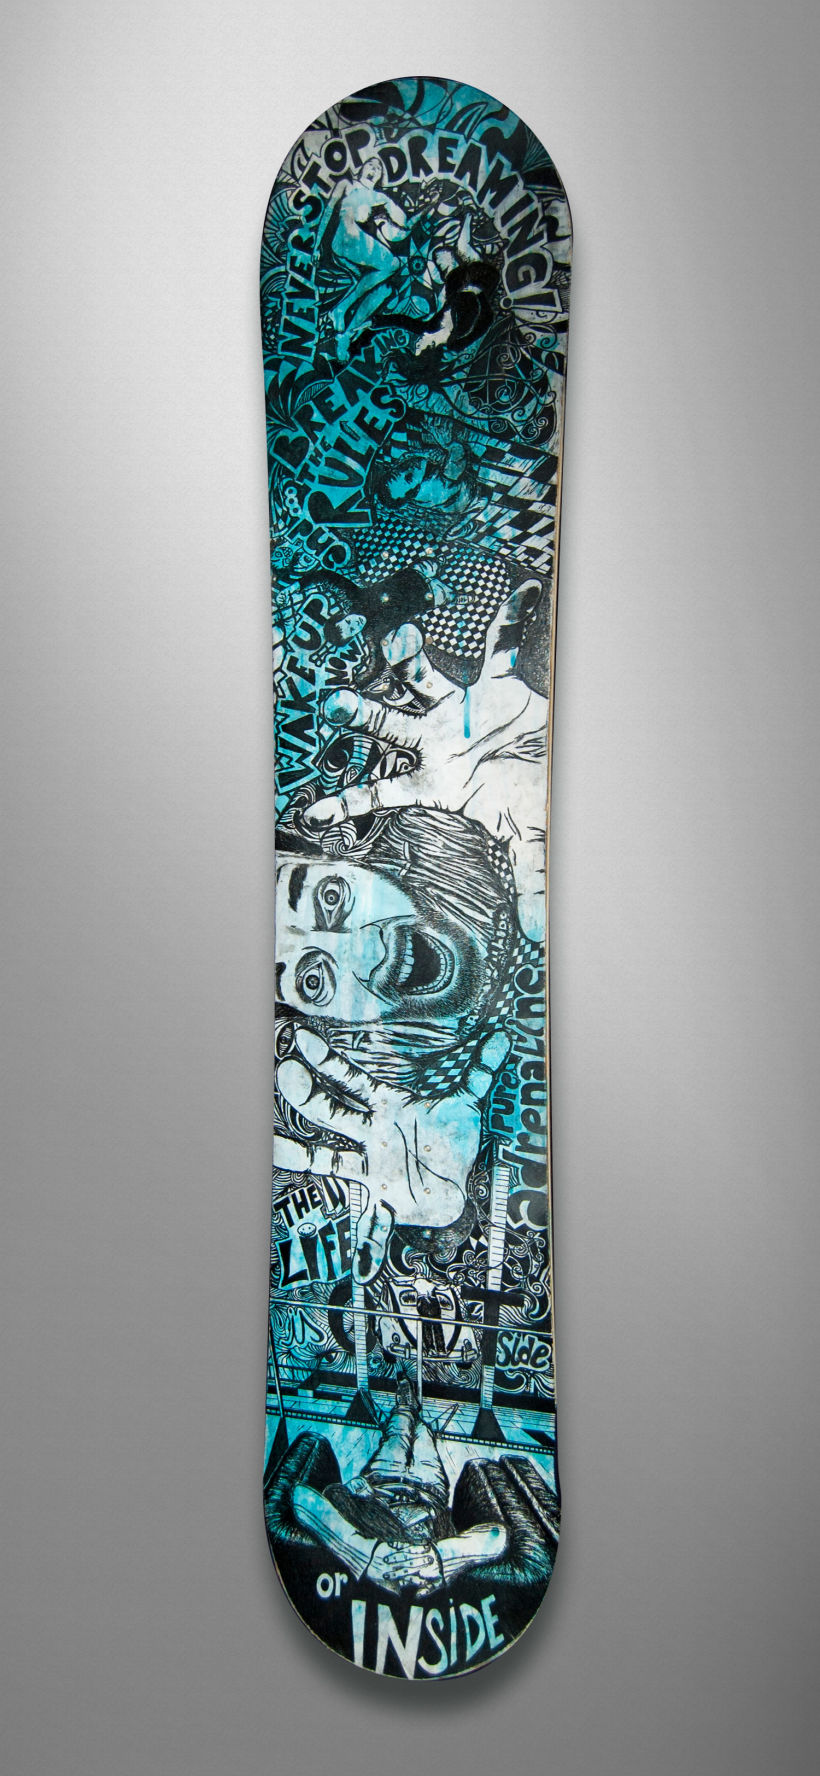 Crash-Art "snowboard" 2